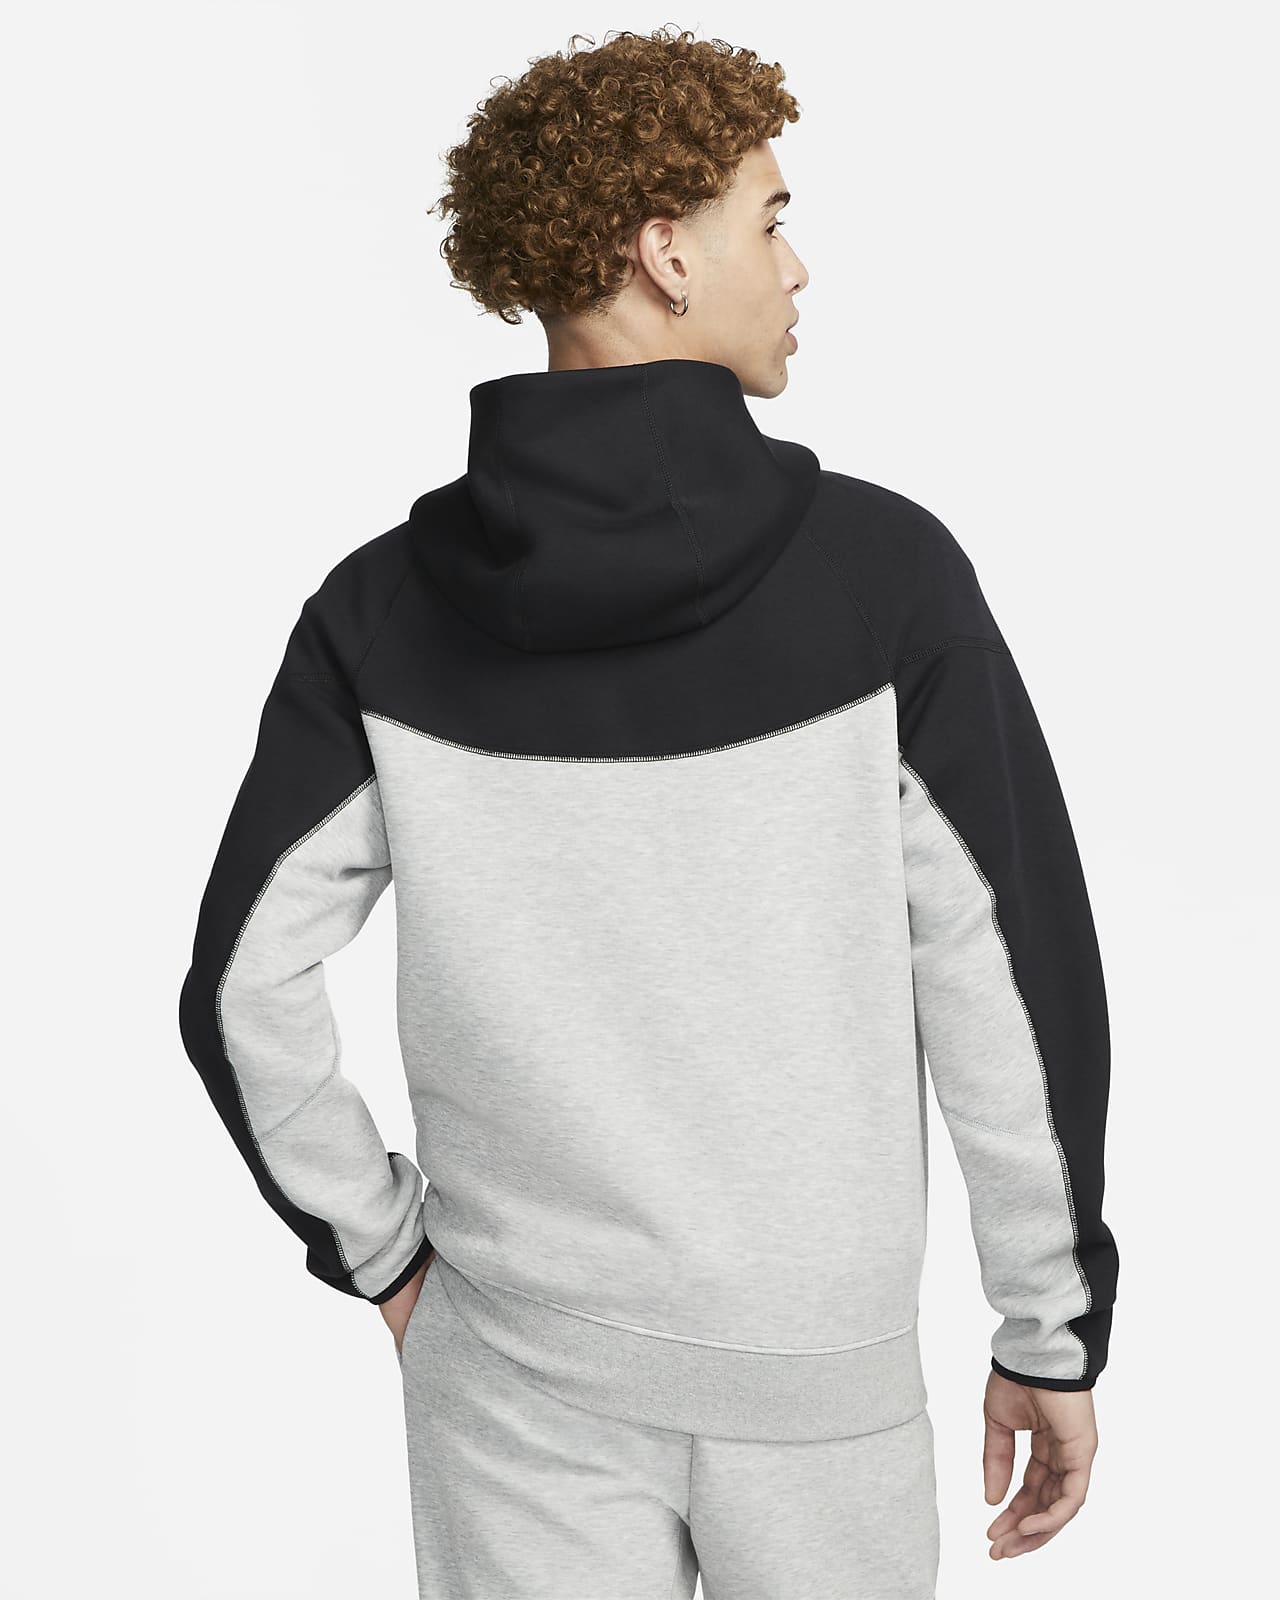 Tech Fleece Clothing. Nike IN